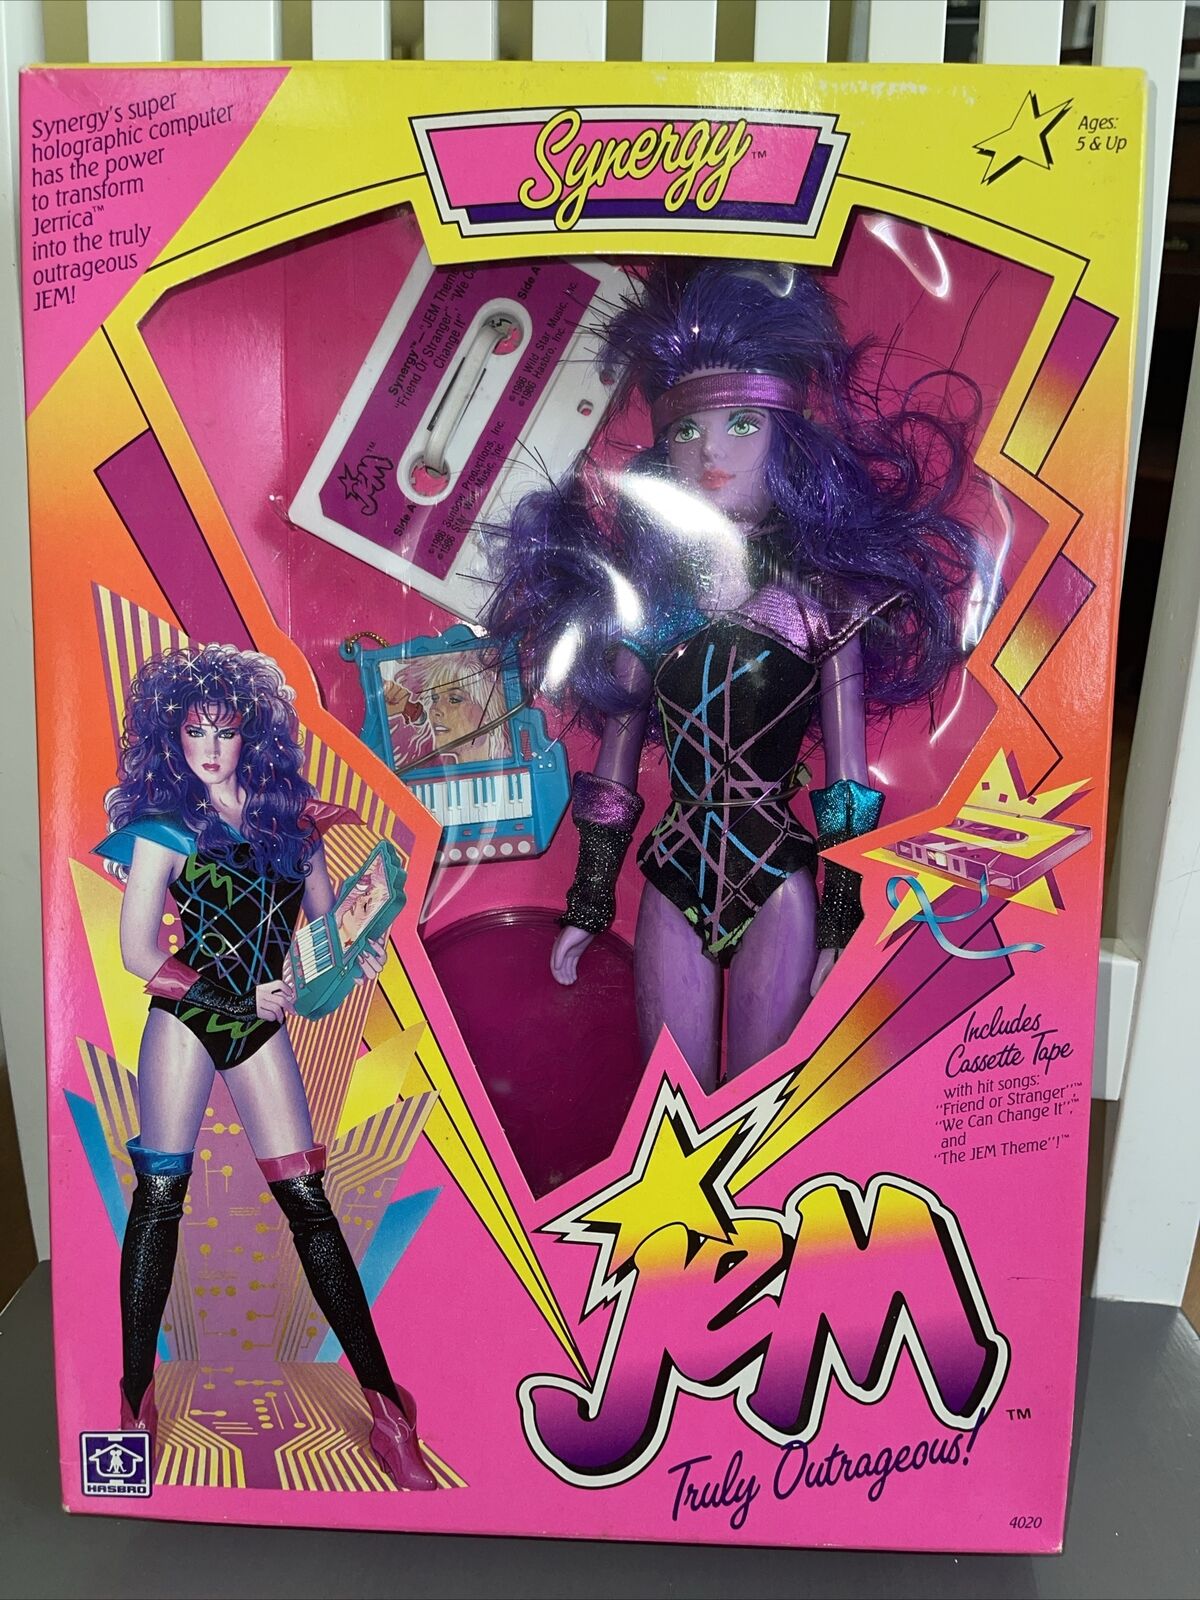 1986 JEM Truly Outrageous Synergy Doll W/ Cassette Set Hasbro #4020 NIB NRFB